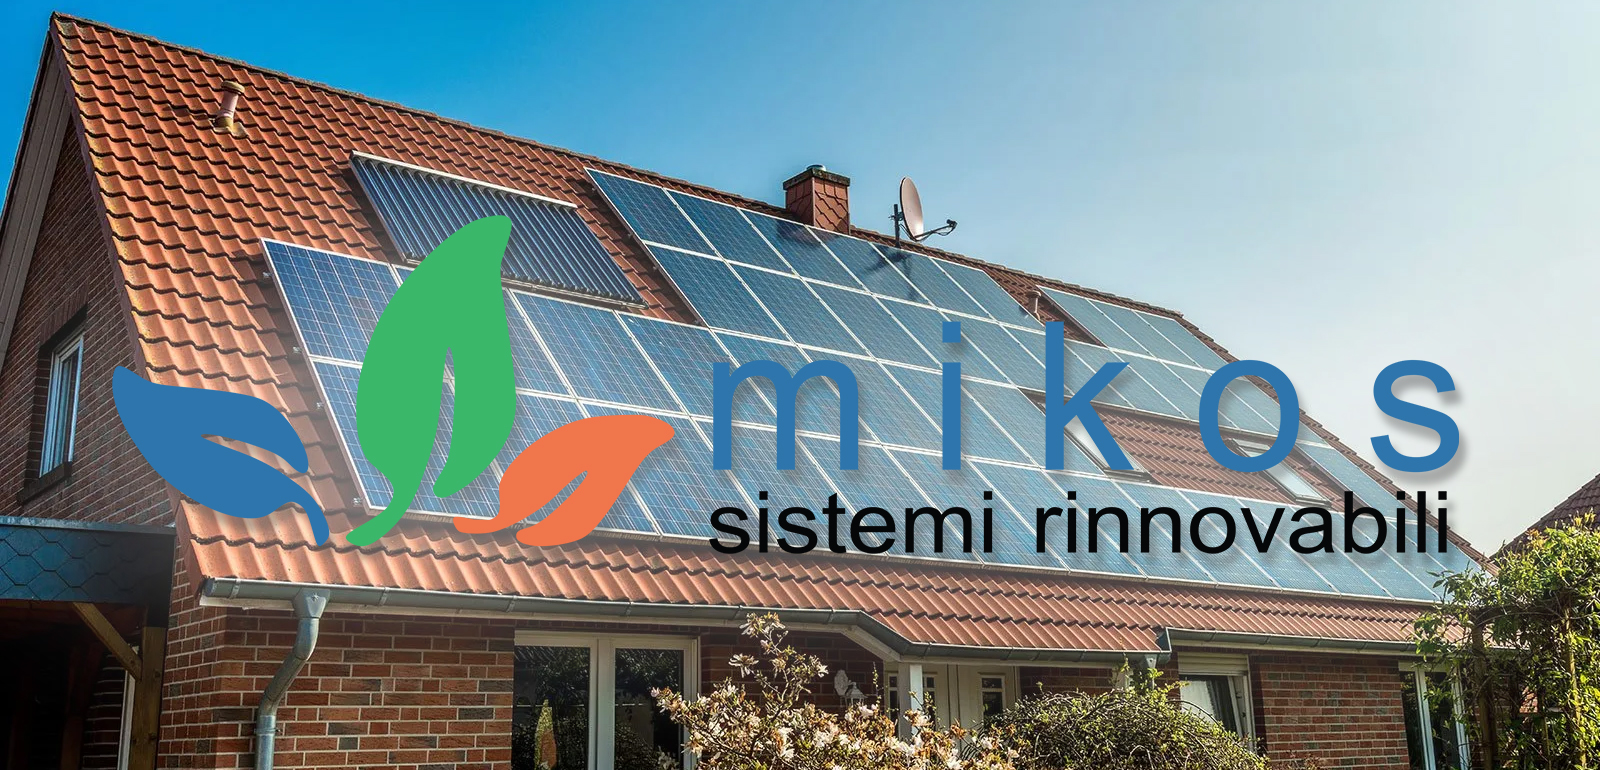 More information about "Mikos Sistemi Rinnovabili è partner dei campionati ACI ESport !"